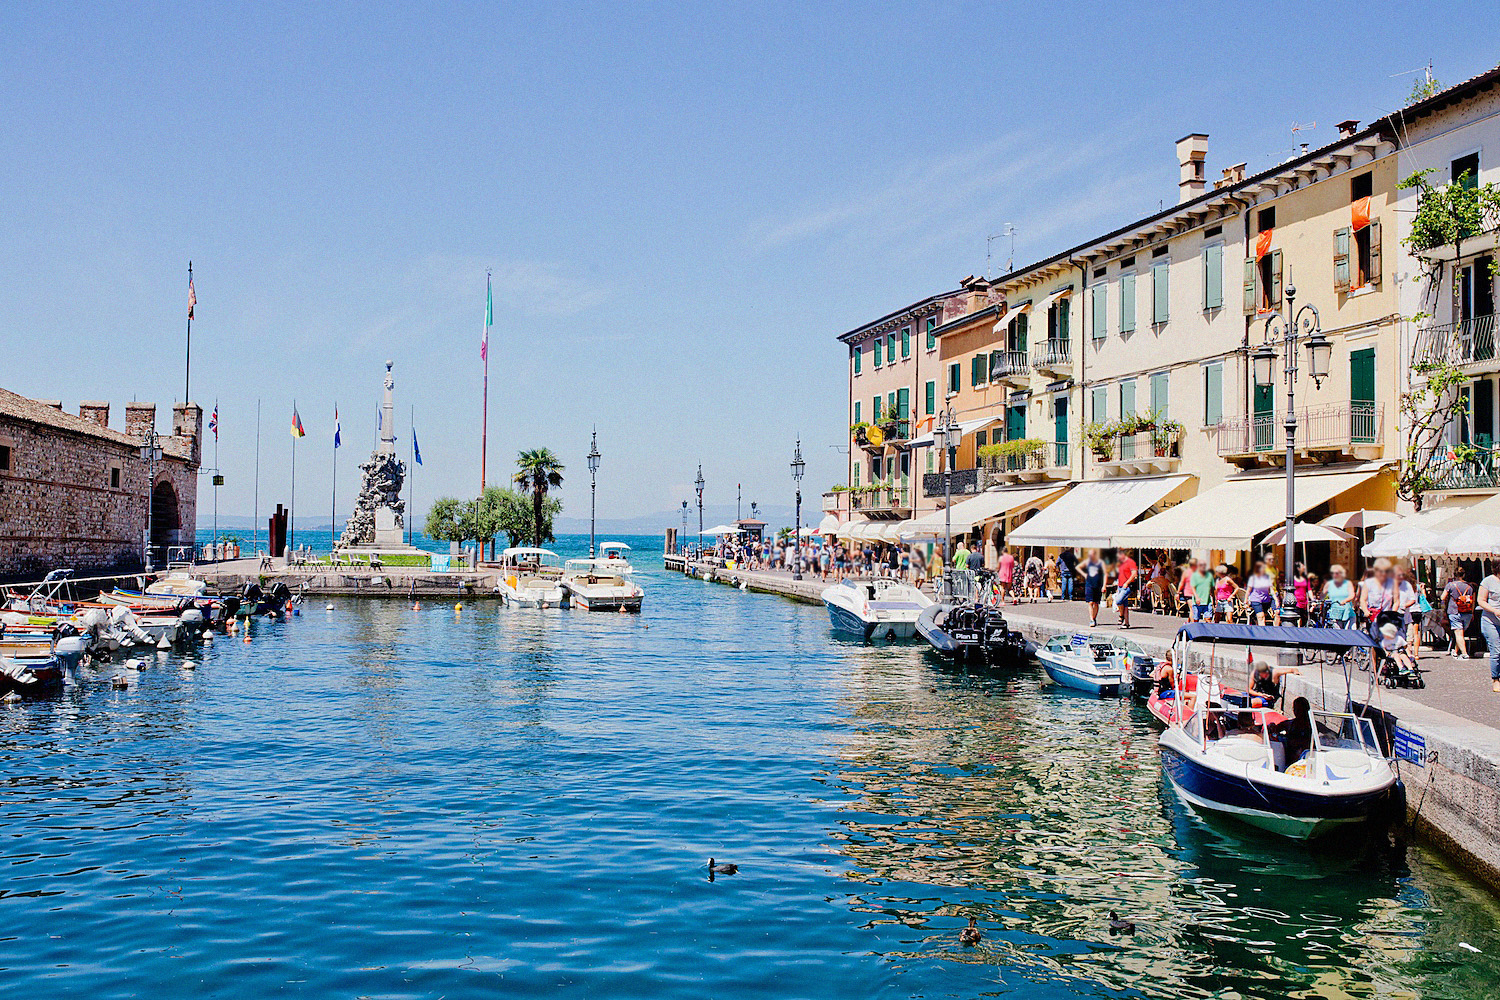 Weekend at Lago di Garda & taking a summer break